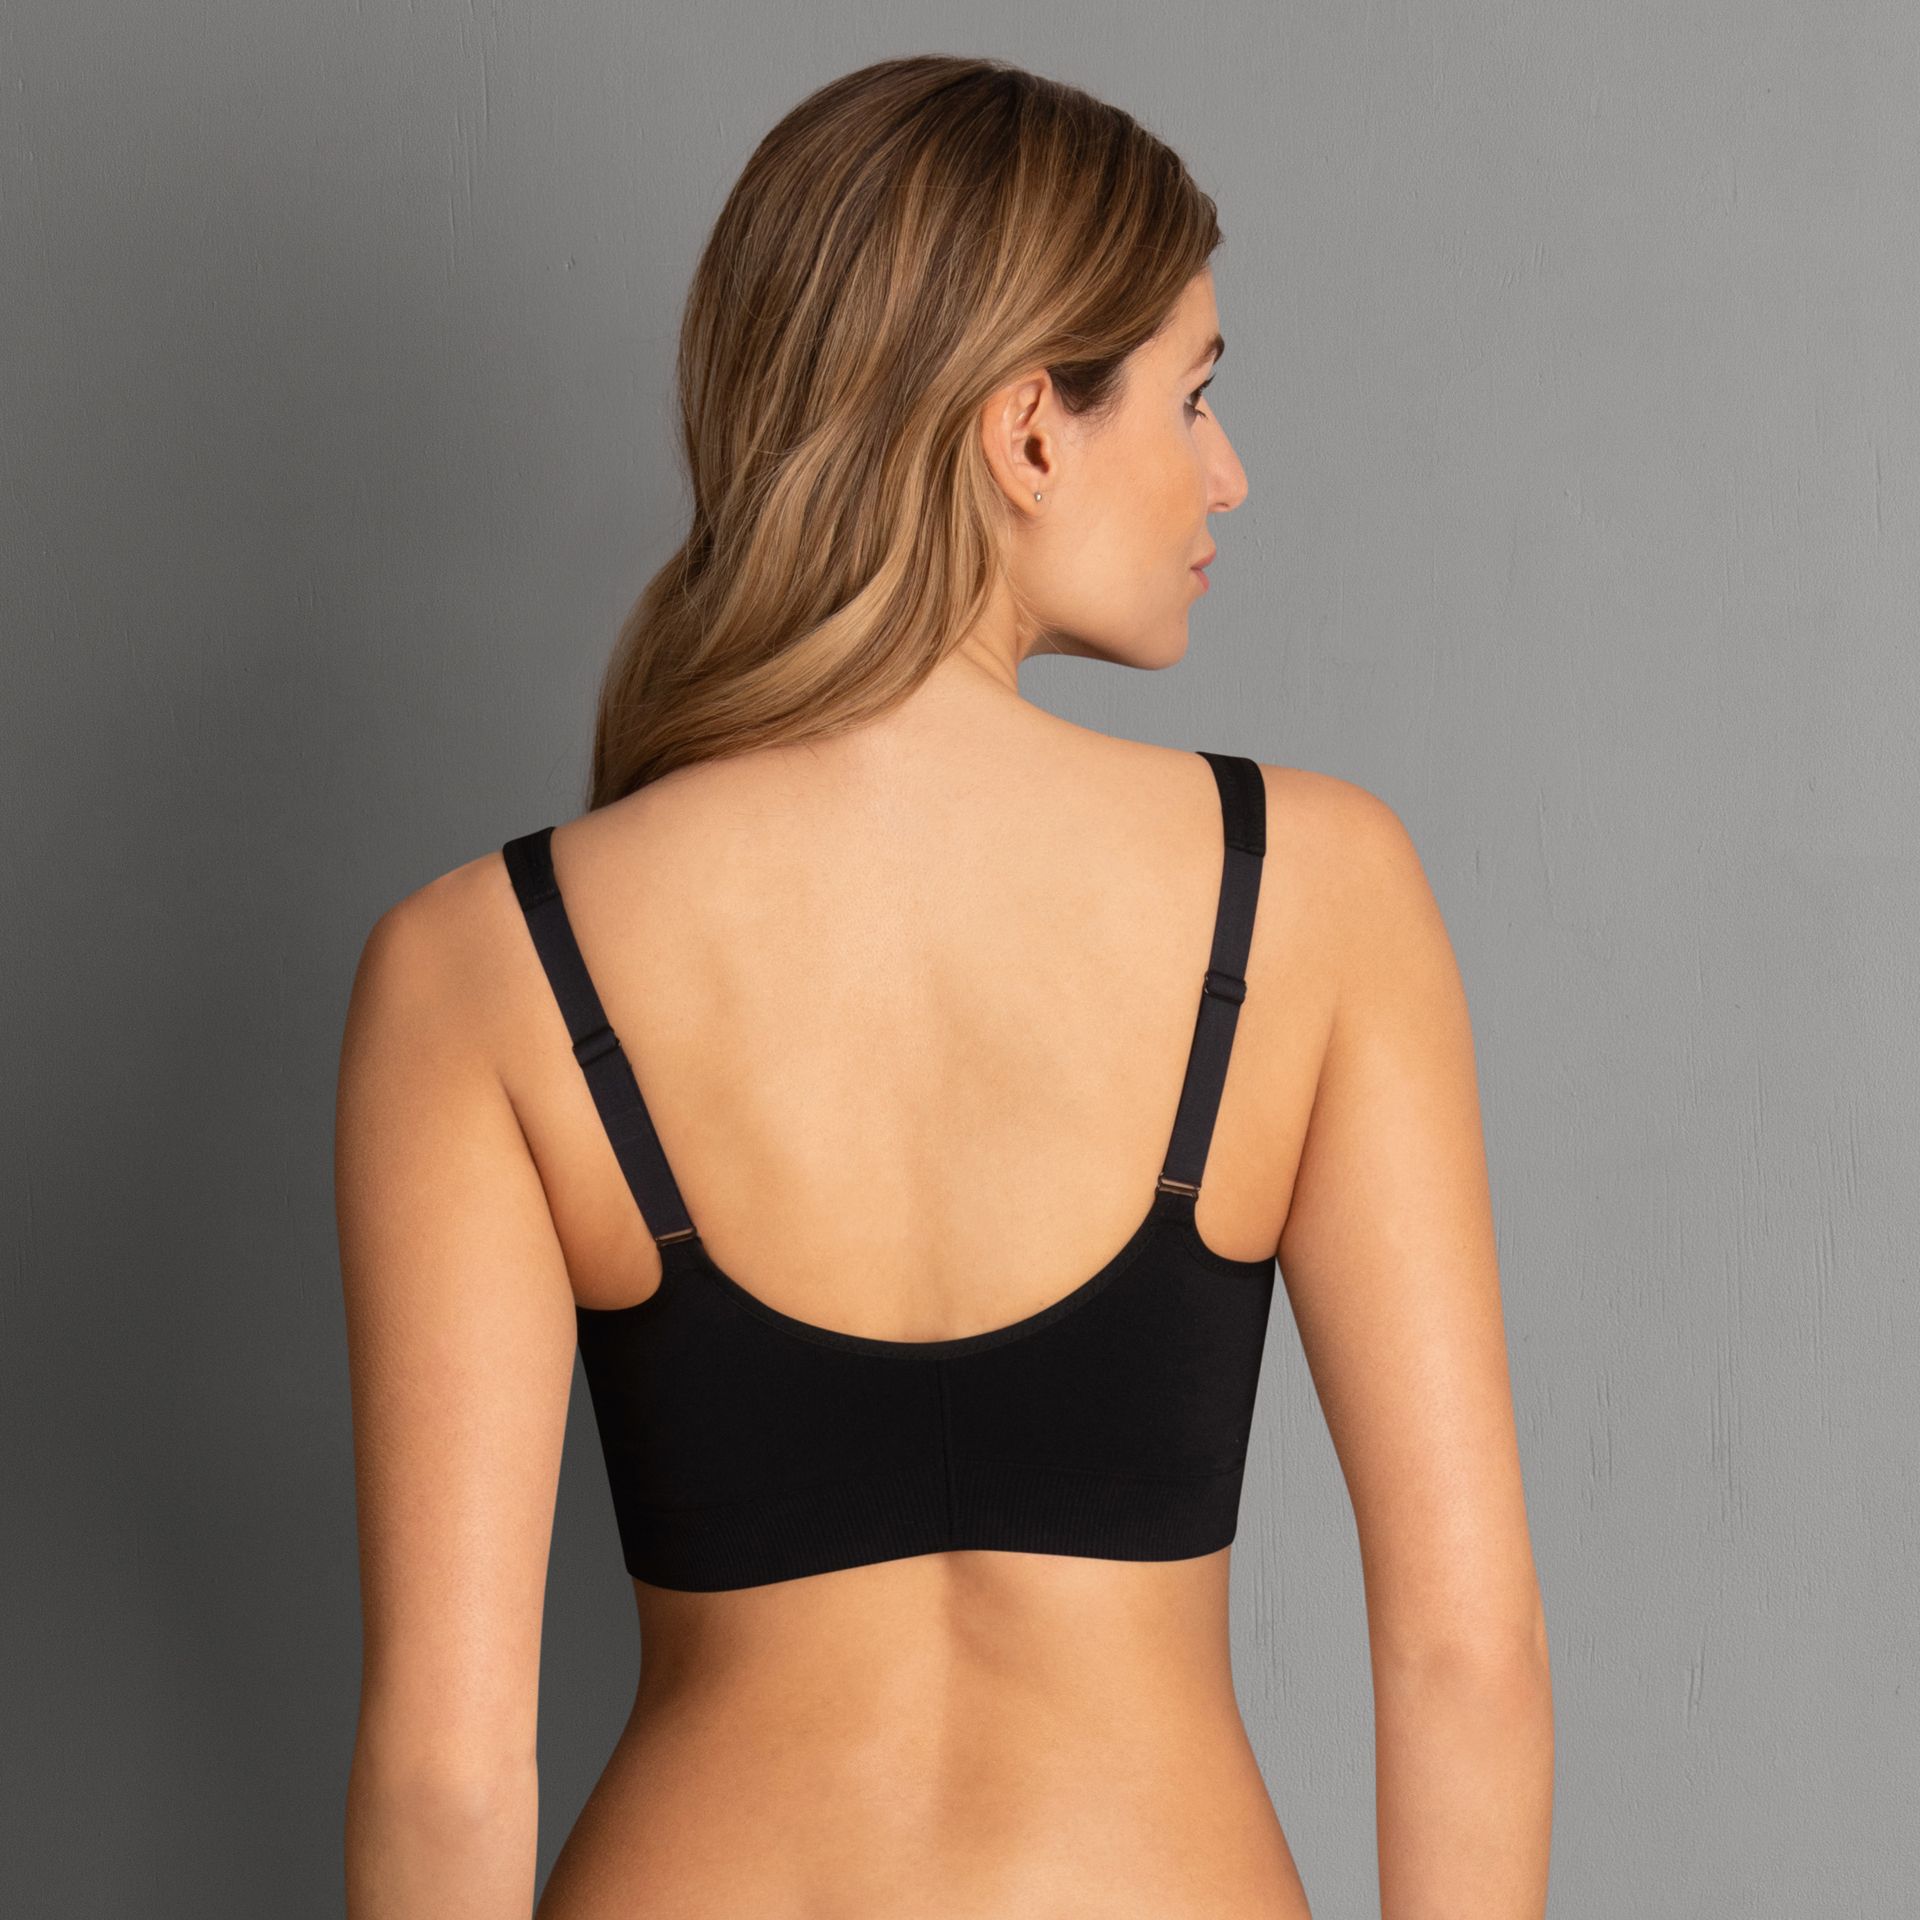 Wholesale women front closure bra For Supportive Underwear 